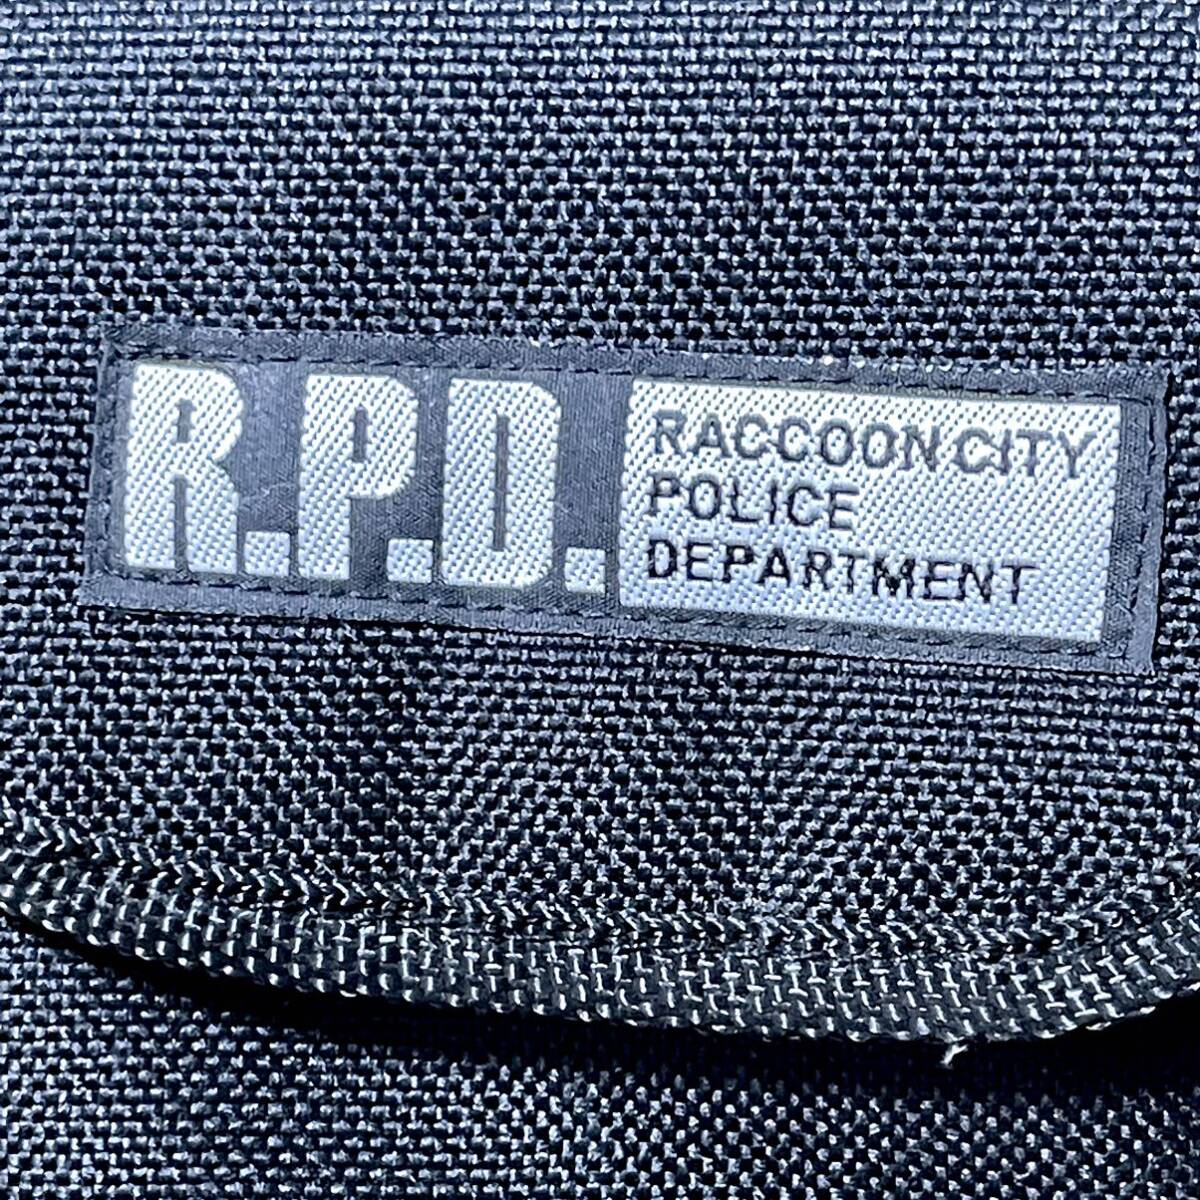  airsoft / personal equipment gun belt / cartridge belt BIO HAZARD/ Vaio hazard raccoon City / raccoon Police S.T.A.R.S/RACCOON POLICE DEP